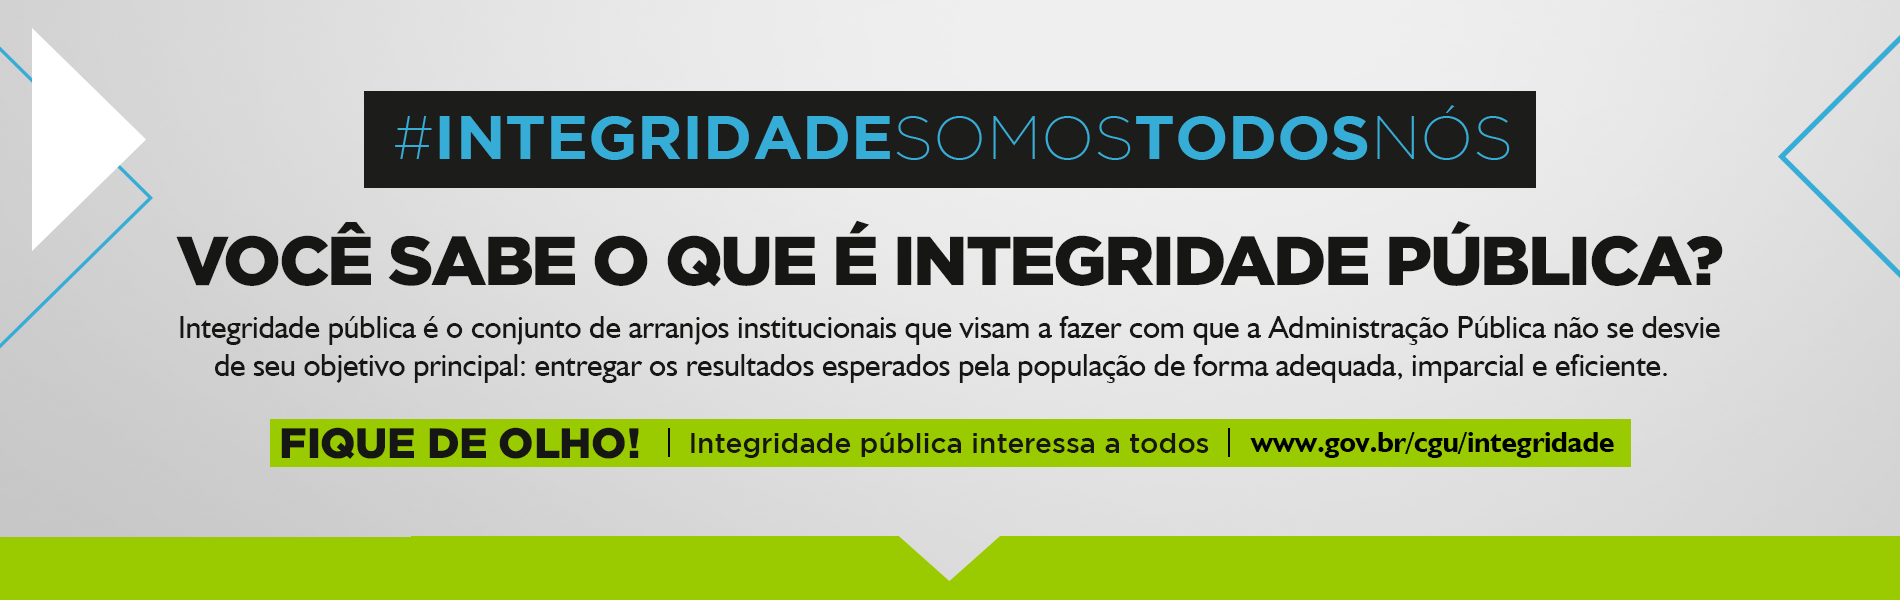 Banner da campanha de Integridade Pública da CGU